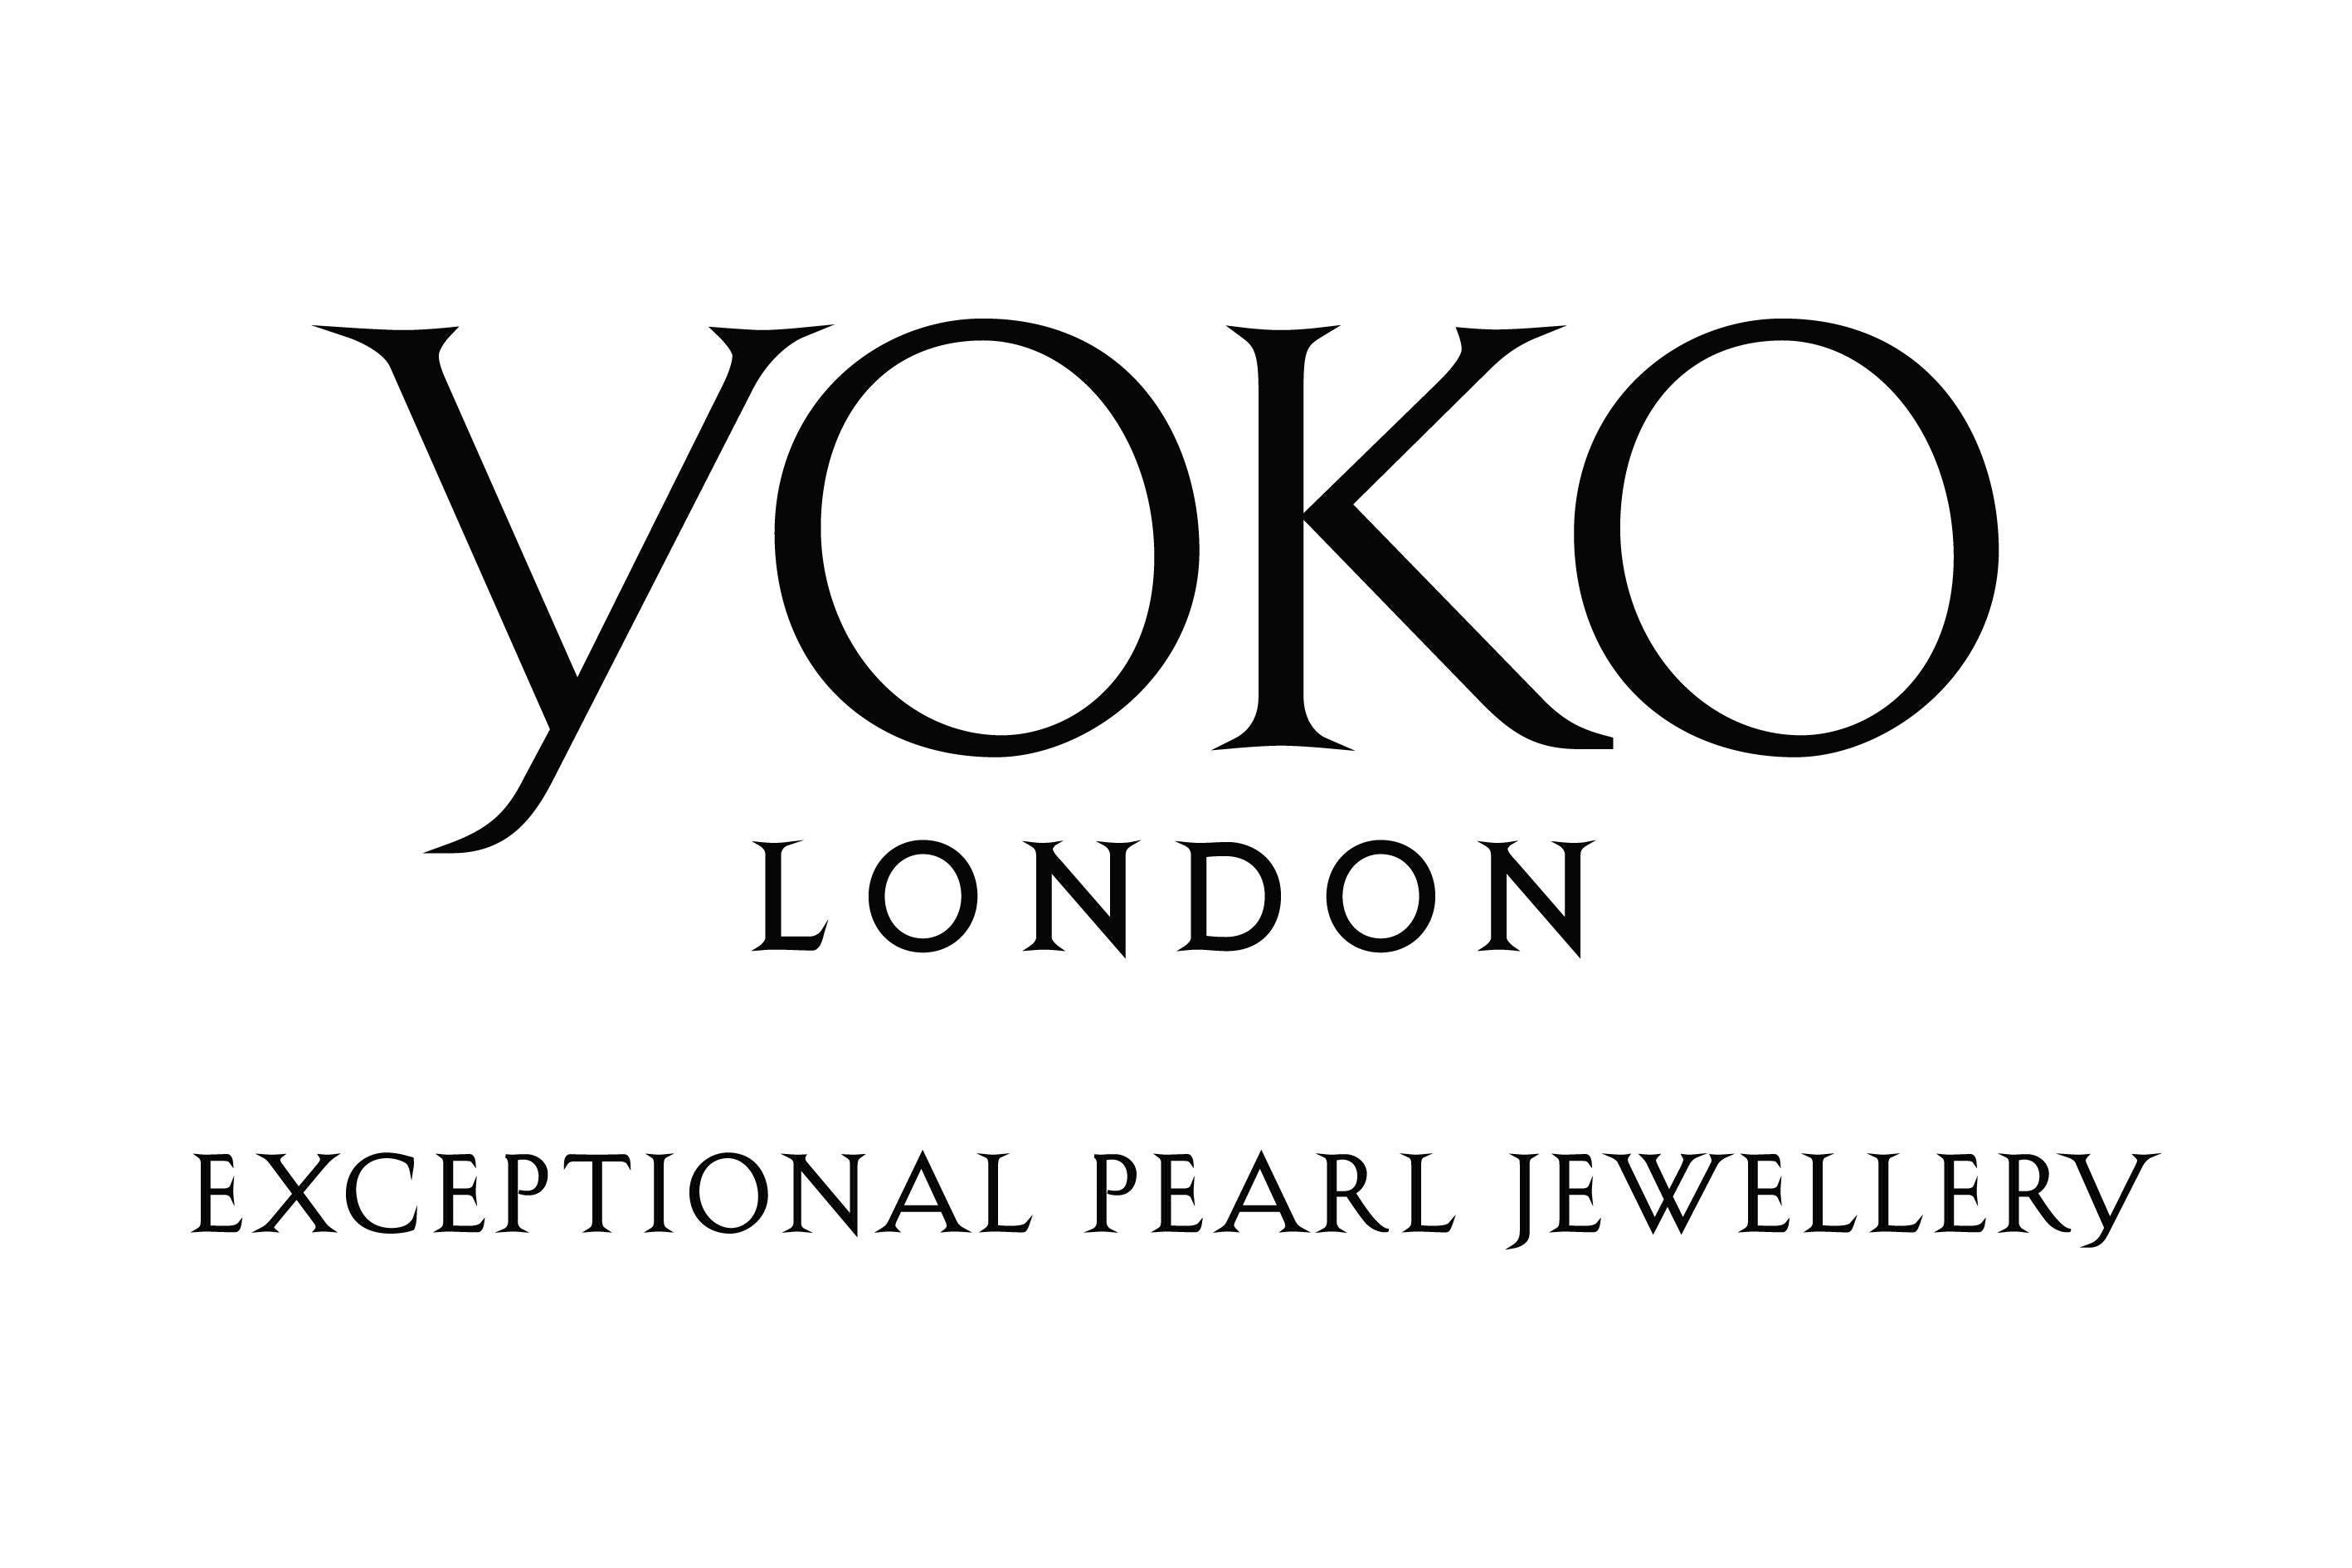 Yoko London South Sea Pearl Earrings in 18 Karat Yellow Gold 4